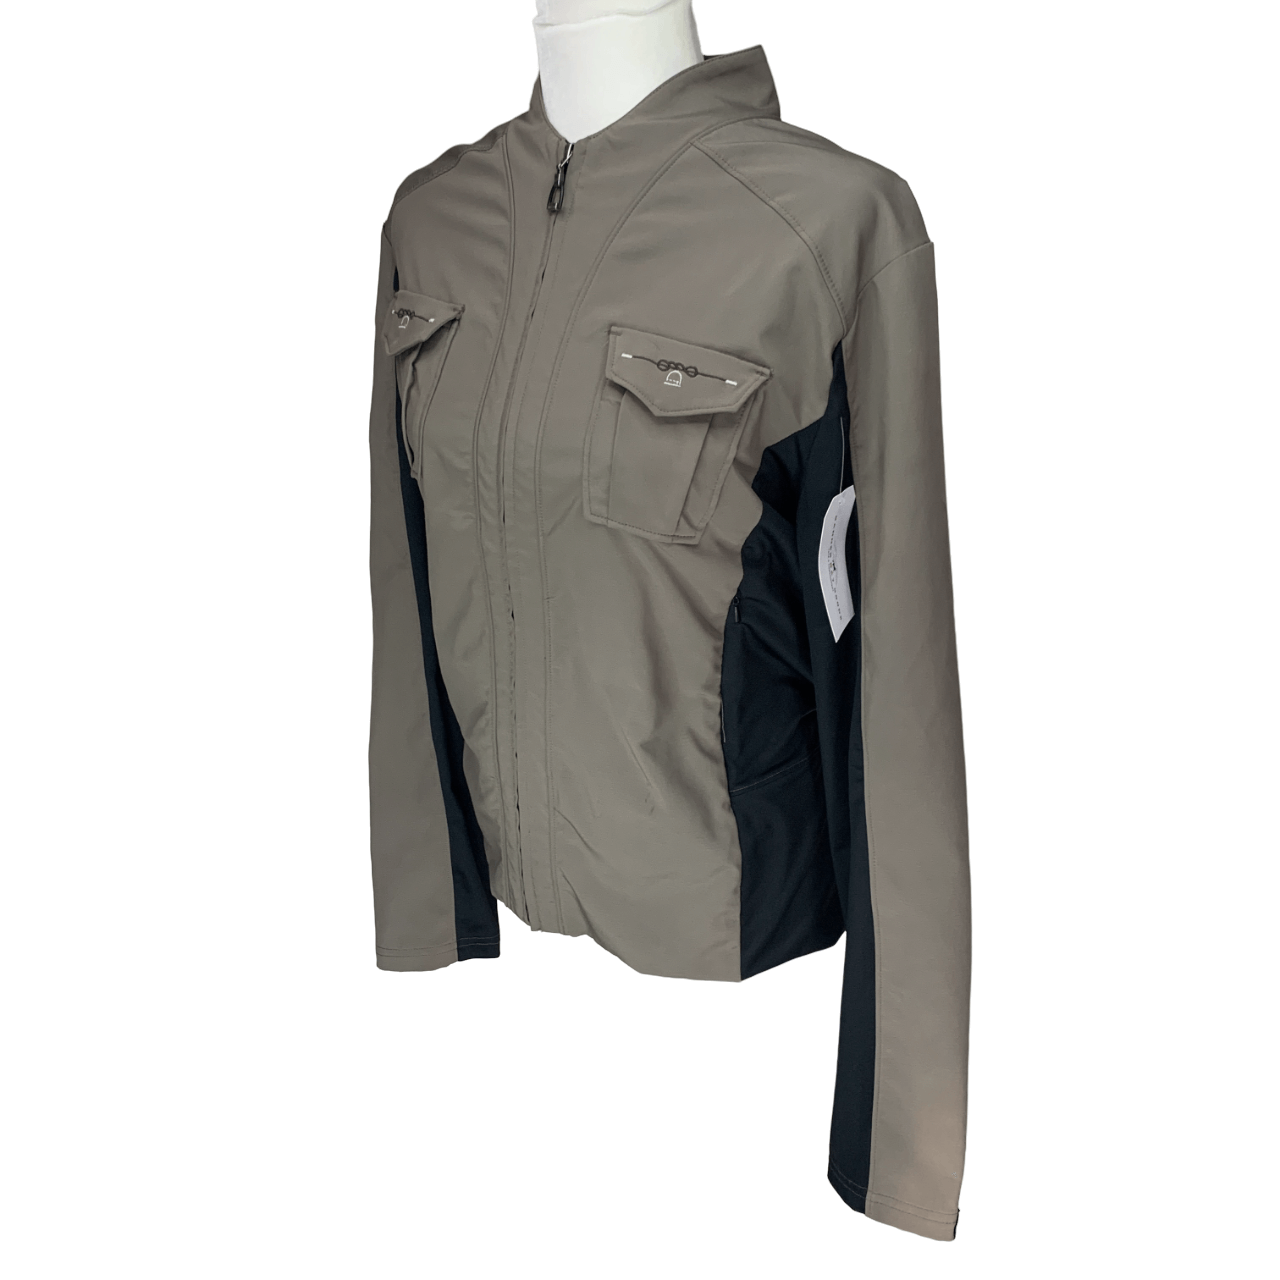 Irideon Softshell Jacket in Khaki - Woman's Large